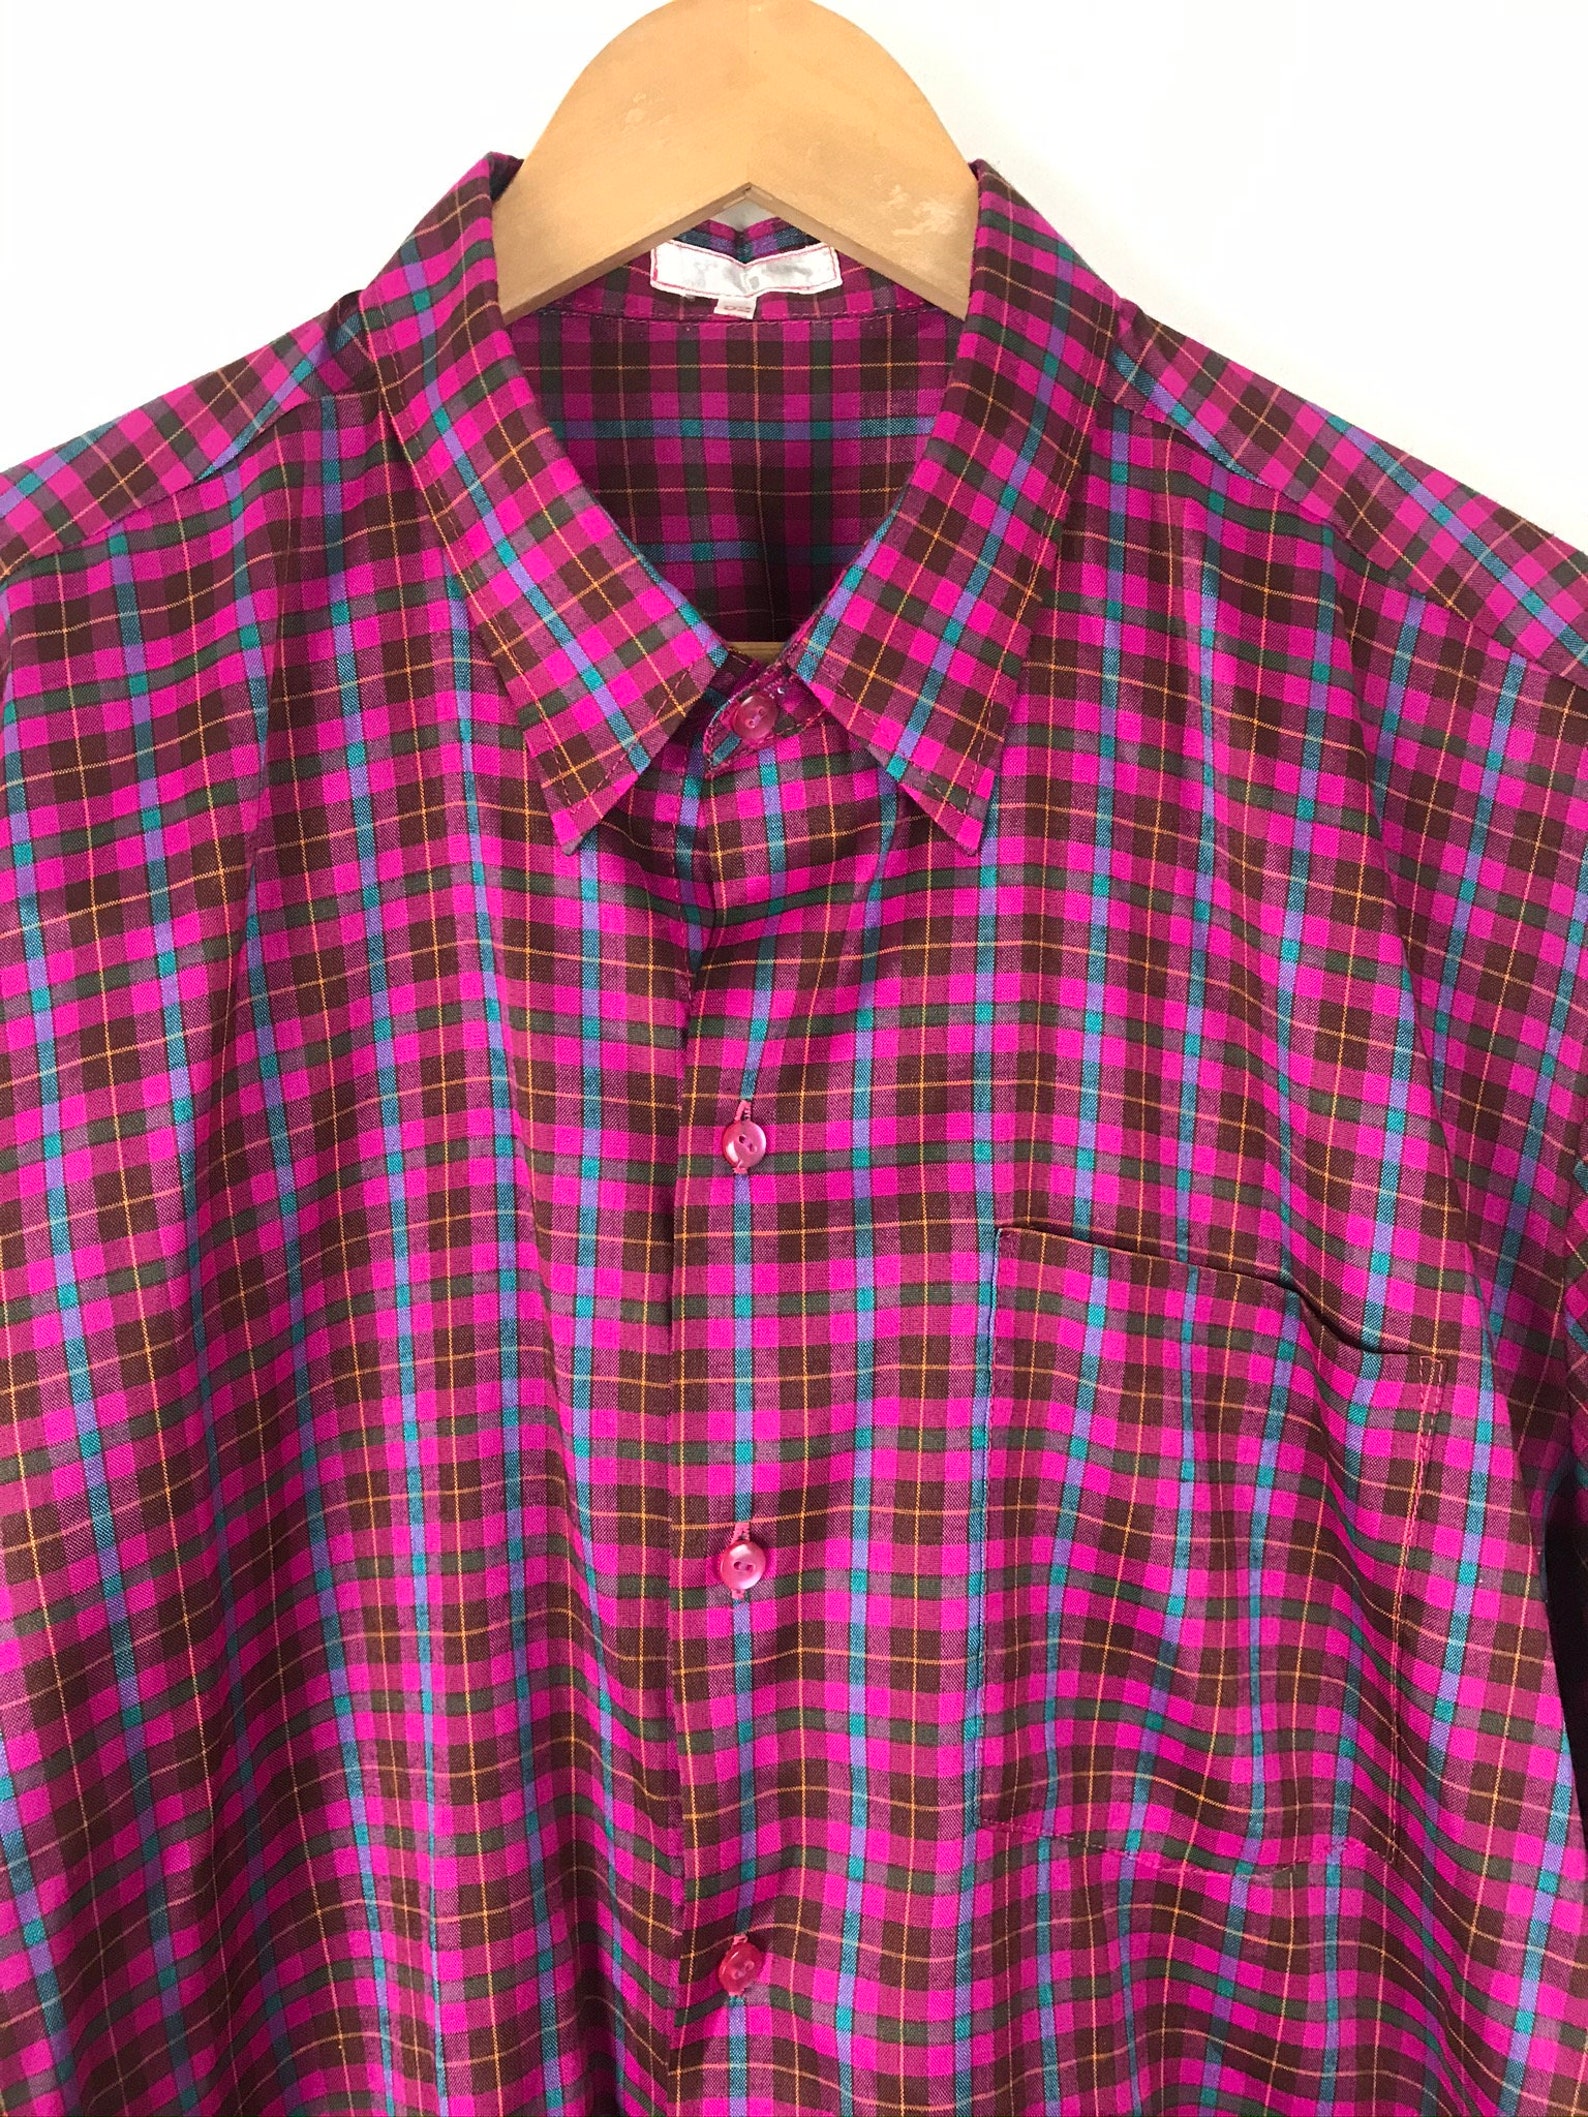 Vintage Hot Pink & Blue Plaid Button Down Shirt Mens XL Retro - Etsy